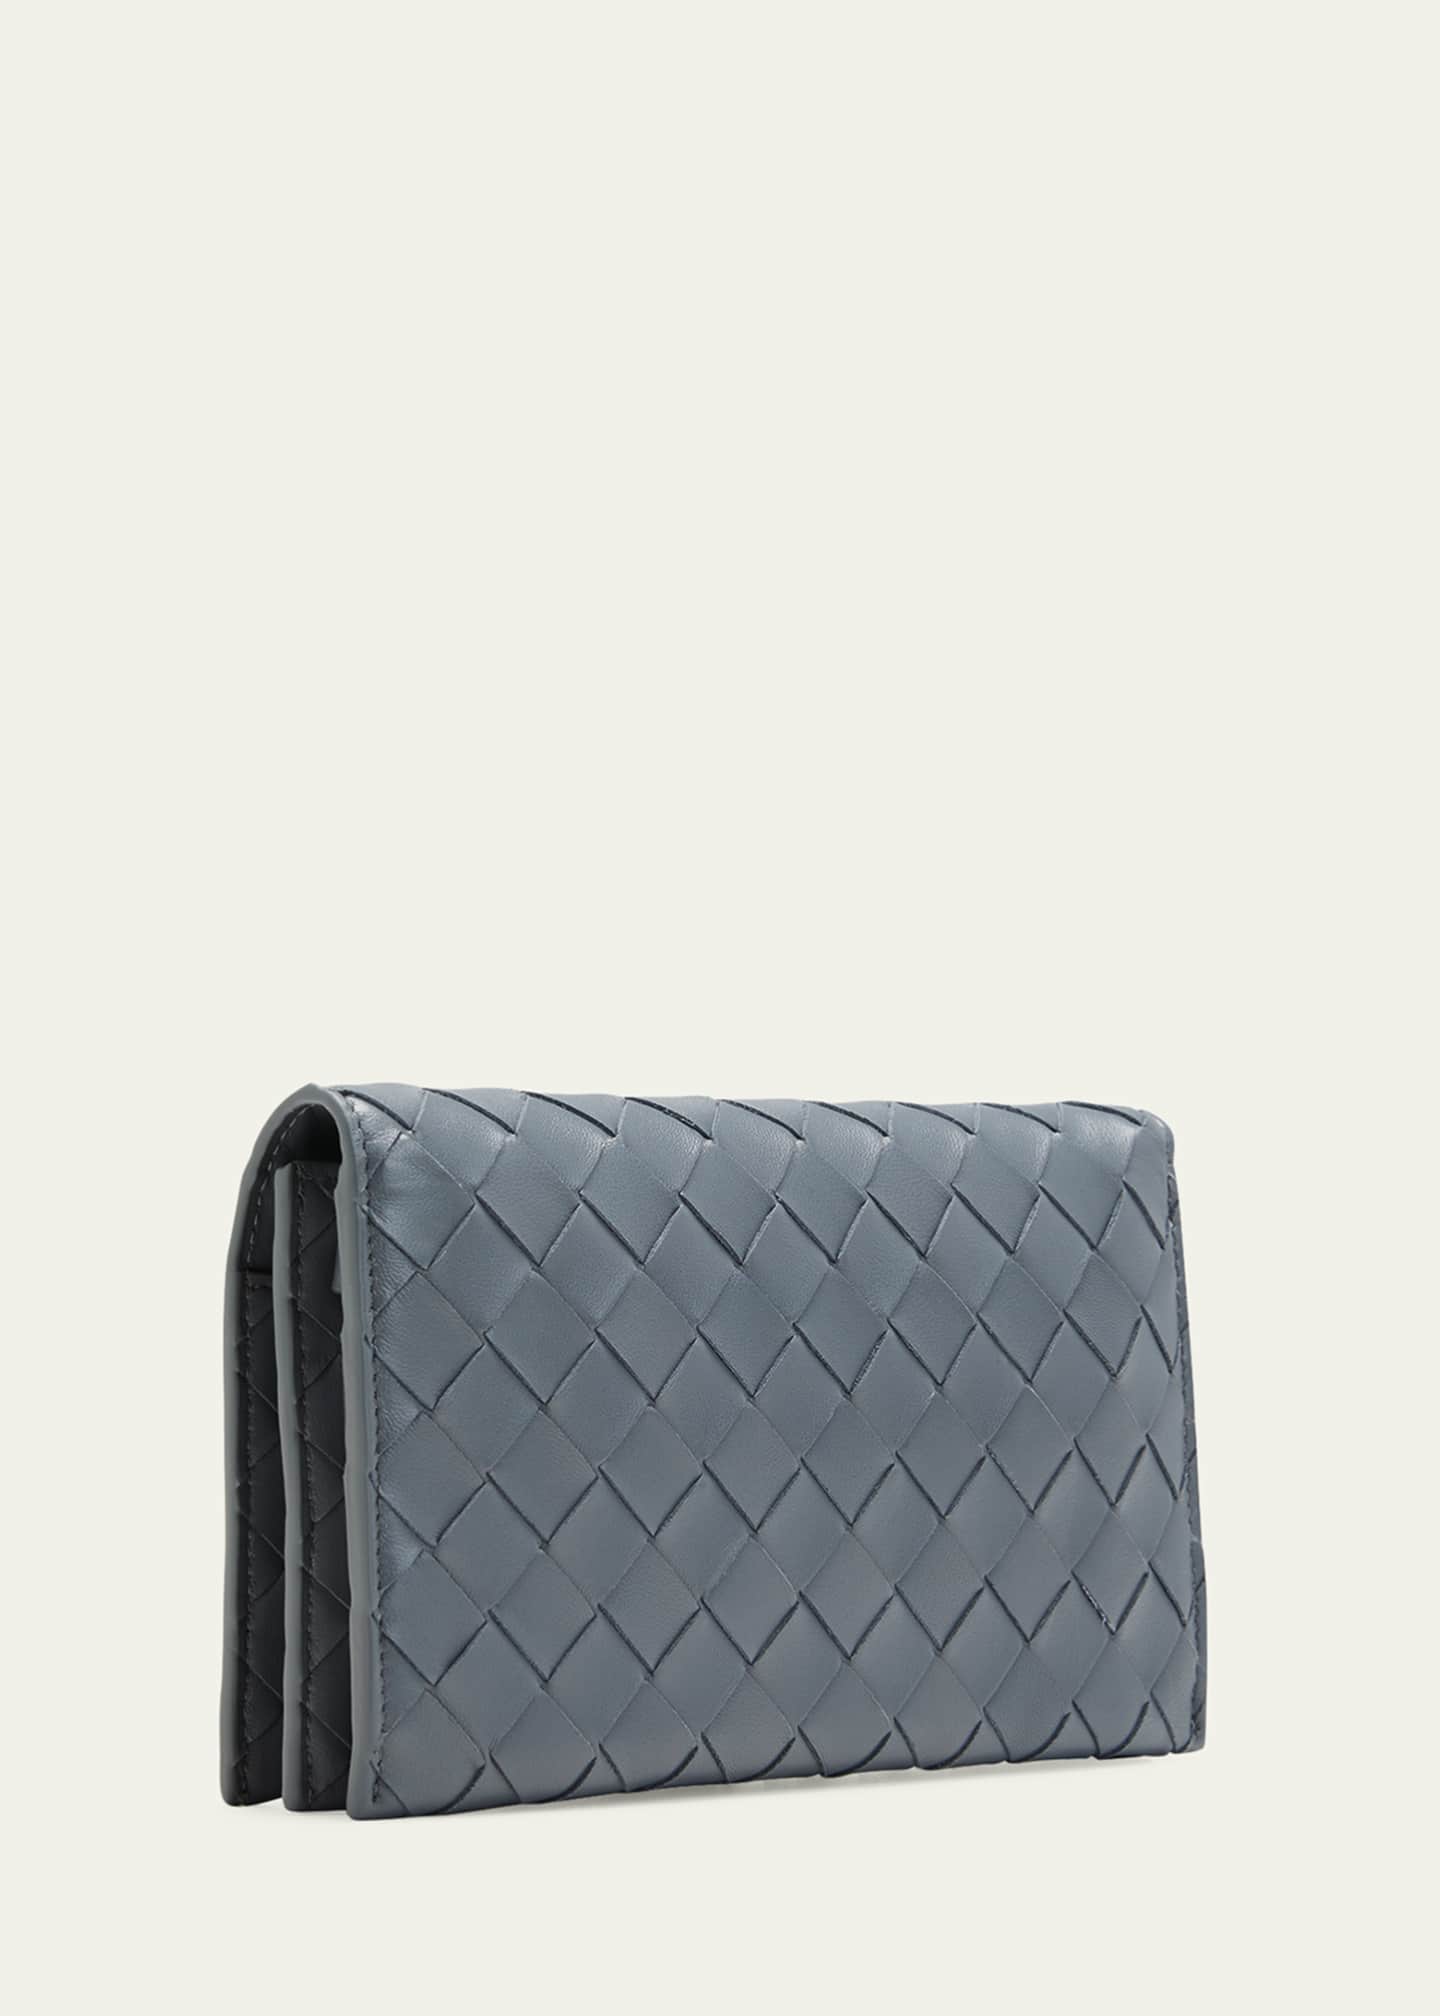 Bottega Veneta Intrecciato Leather Wallet on Strap